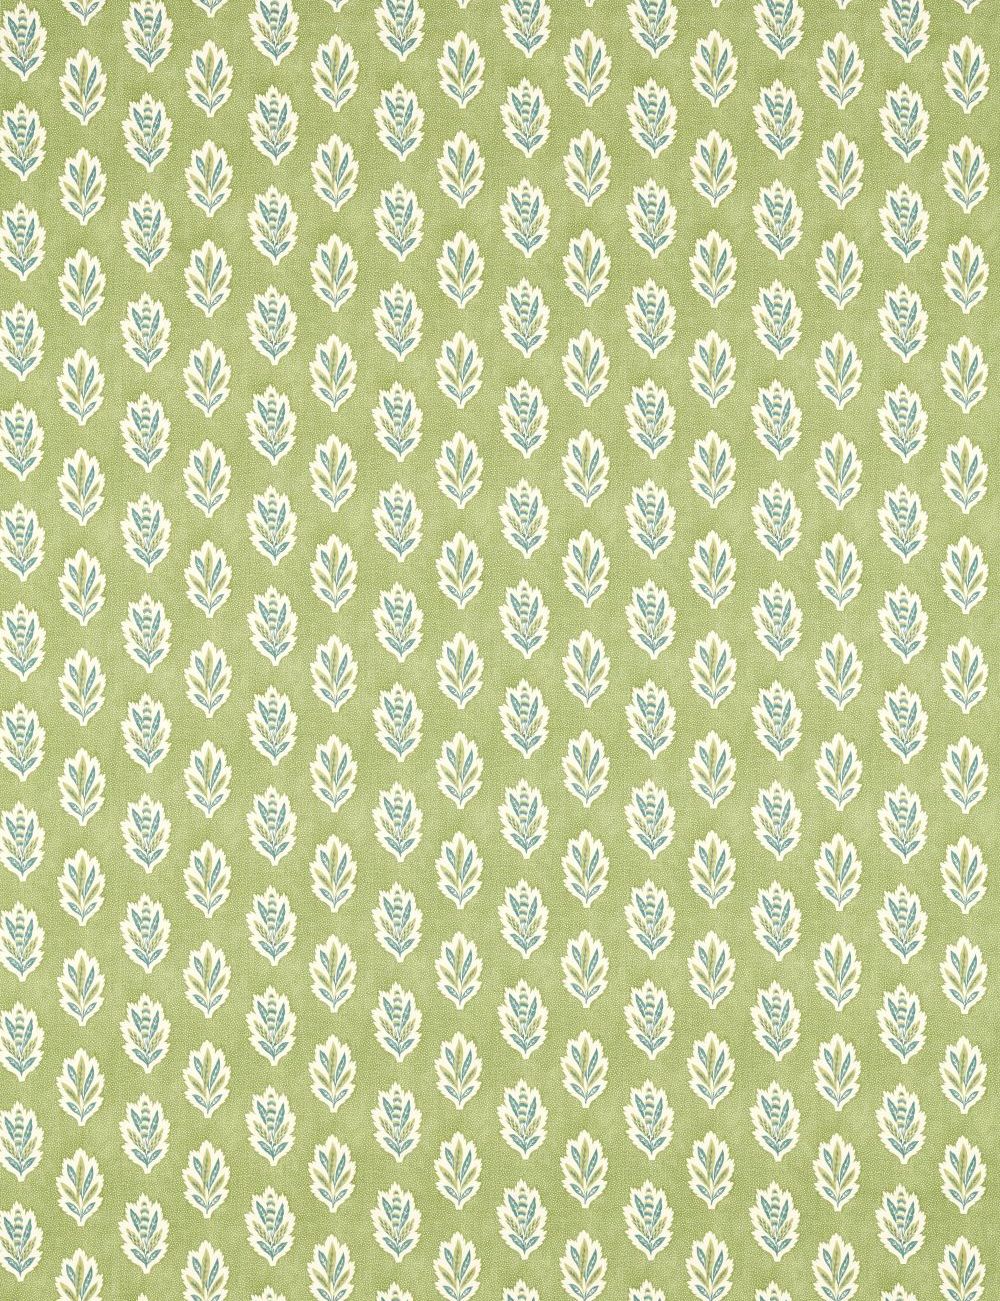 Sessile Leaf Fabric - Artichoke - by Sanderson